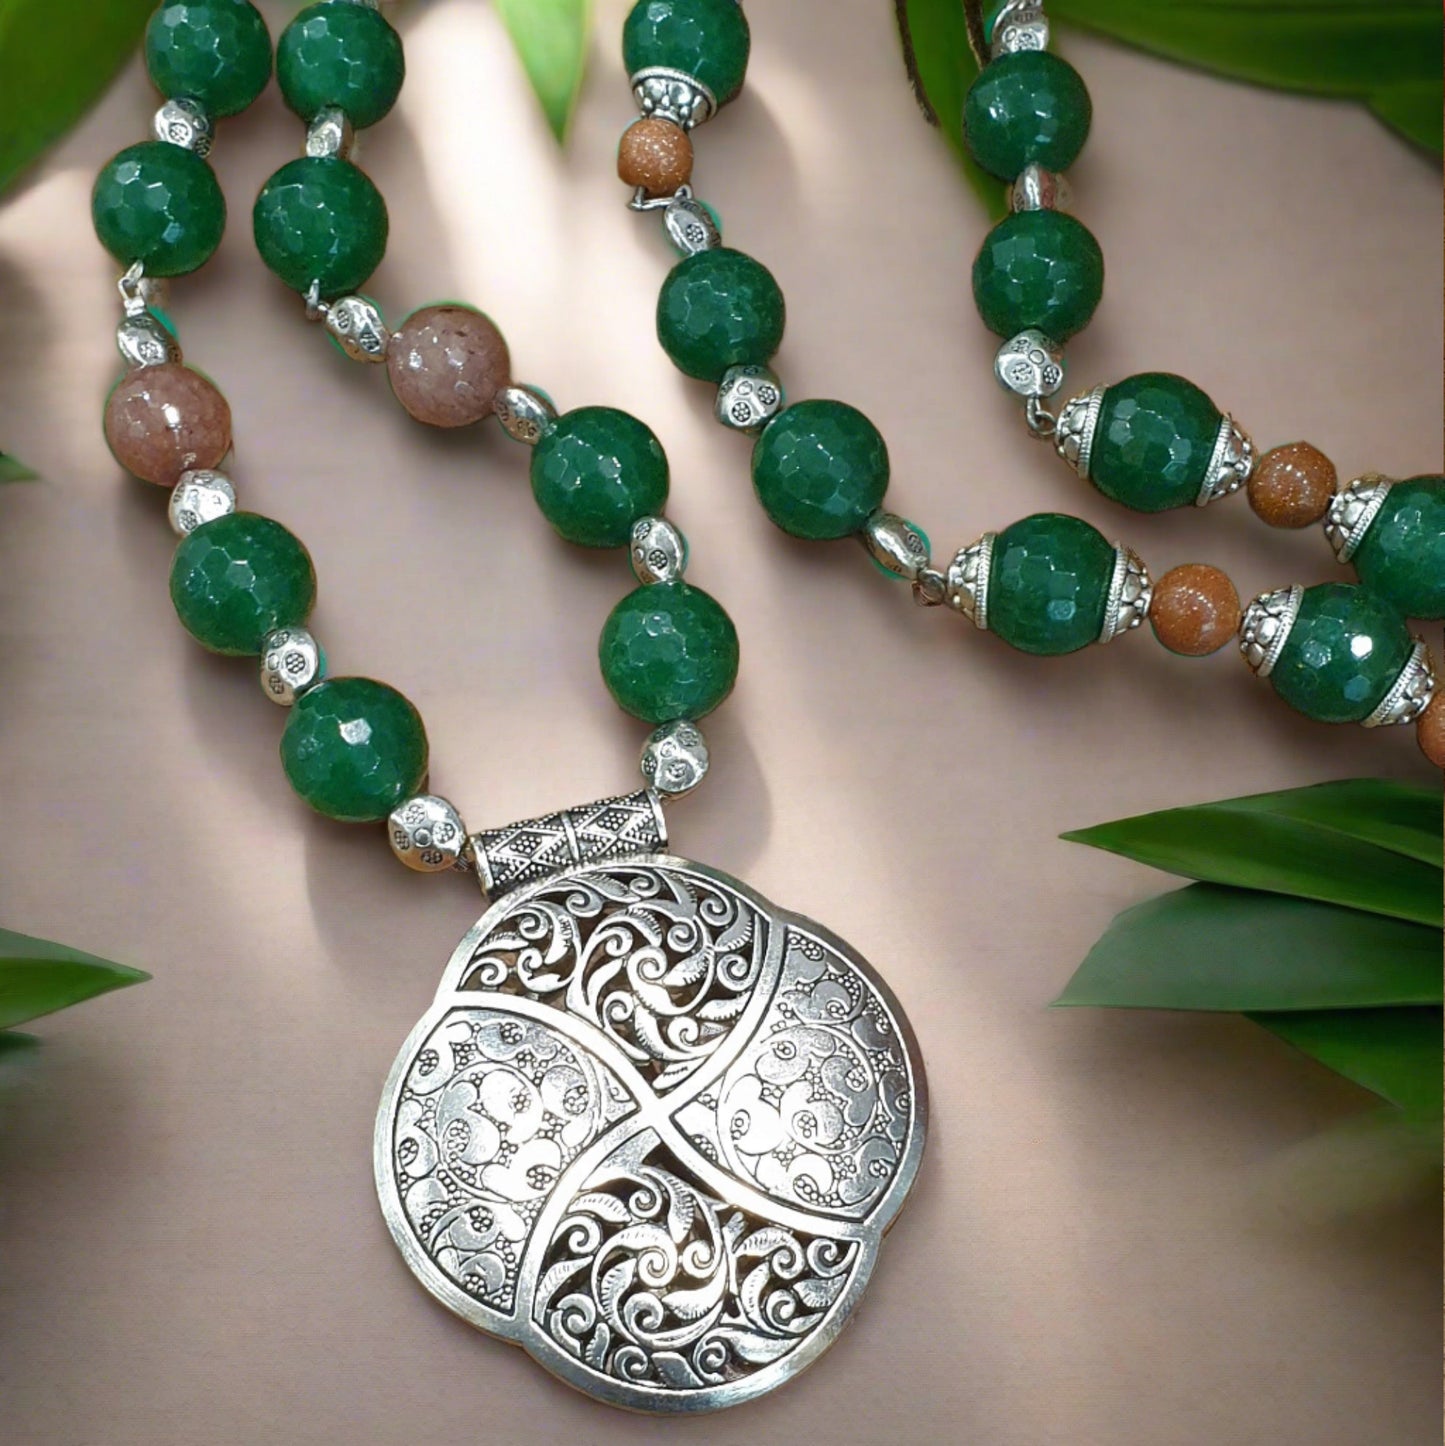 Long Natural 3 in 1 Gemstone (Jade Quartz, Agate & Sandstone) Necklace with Pendant